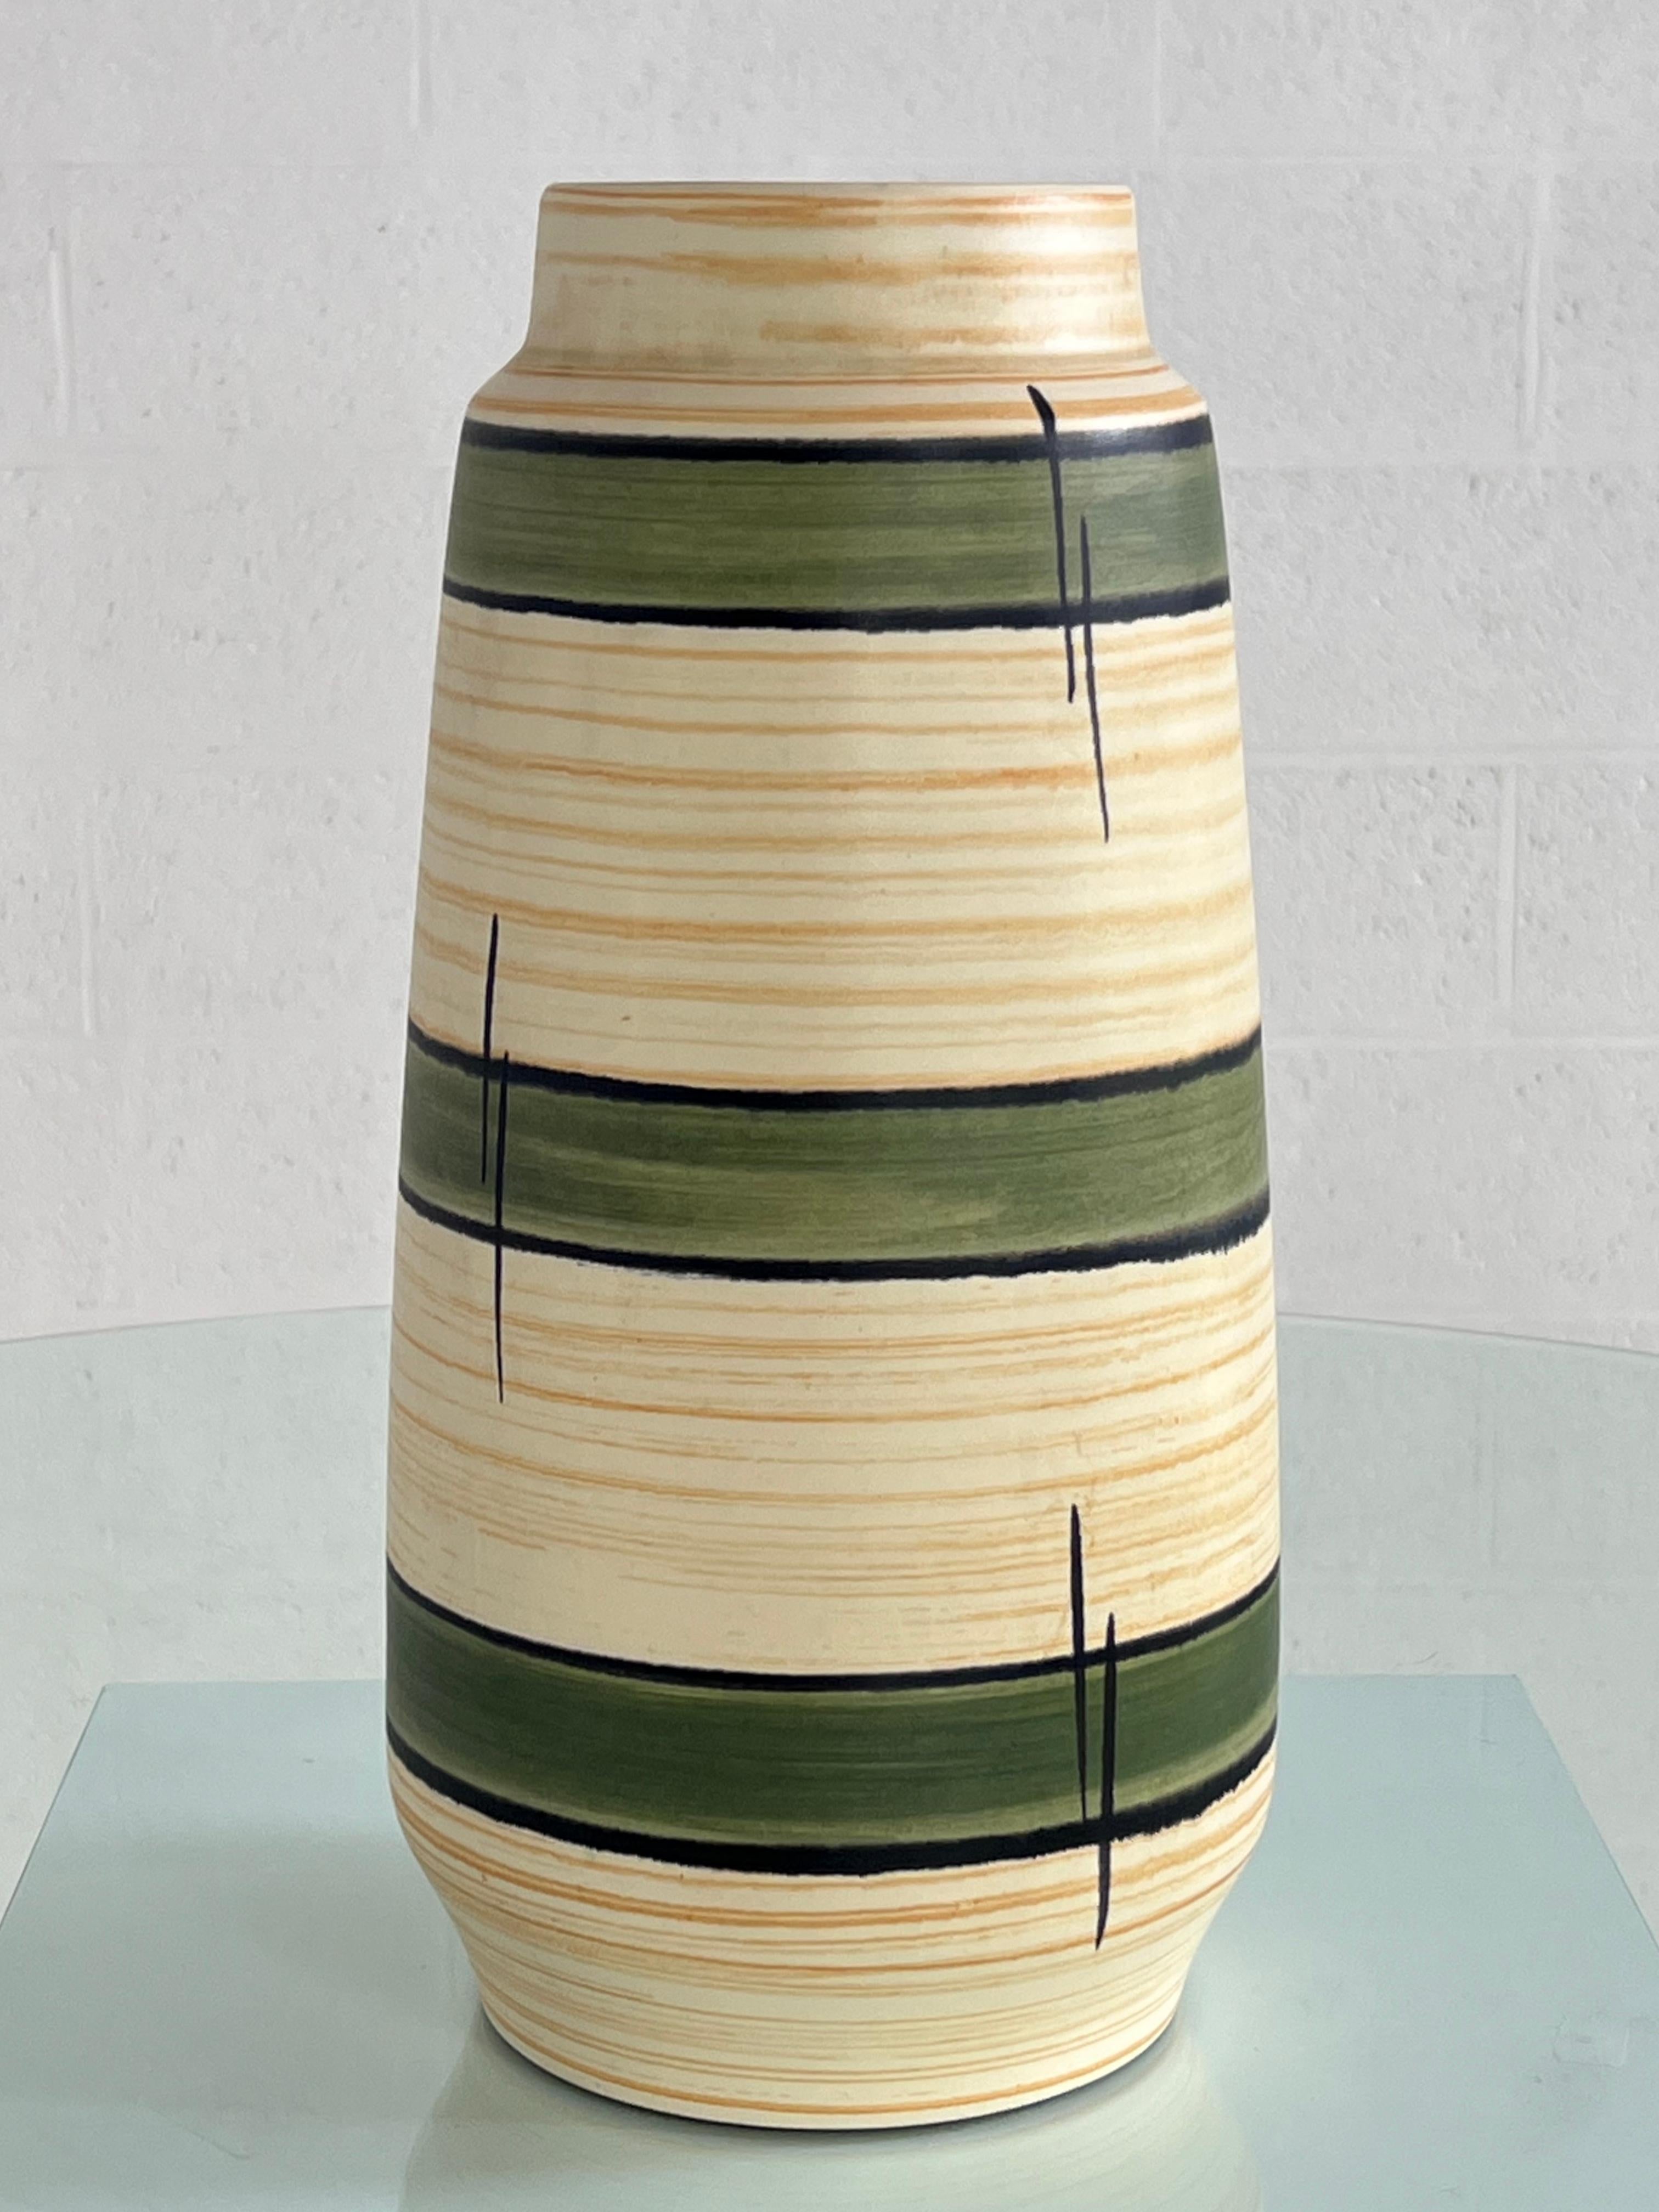 1960s West Germany Handmade Ceramic Vase with beige, black and oliv green color 